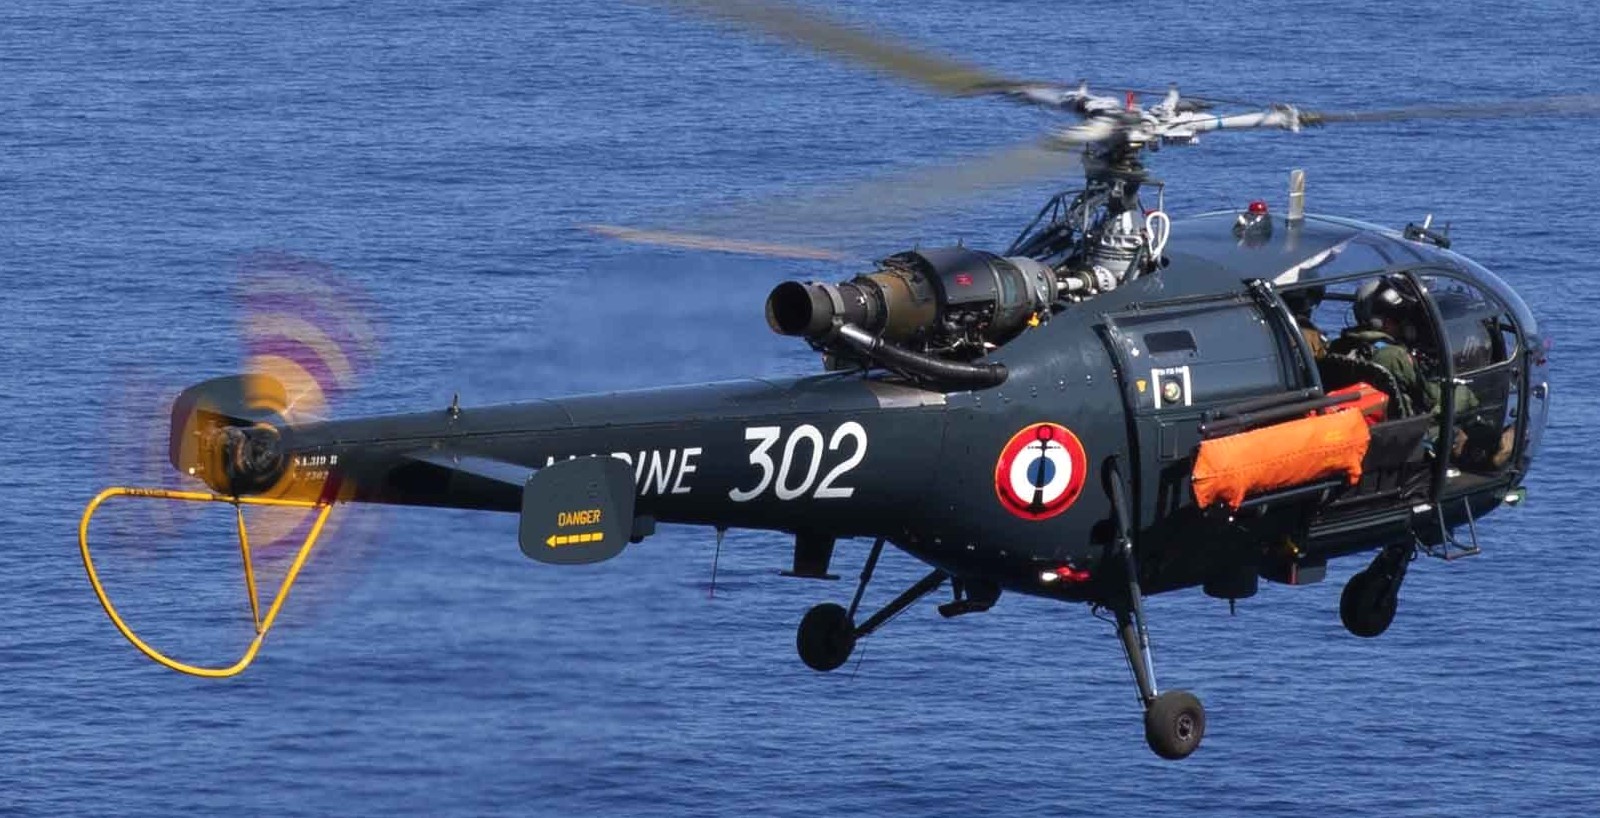 sa 316 319 alouette iii helicopter french navy marine nationale aeronavale flottille 302 24